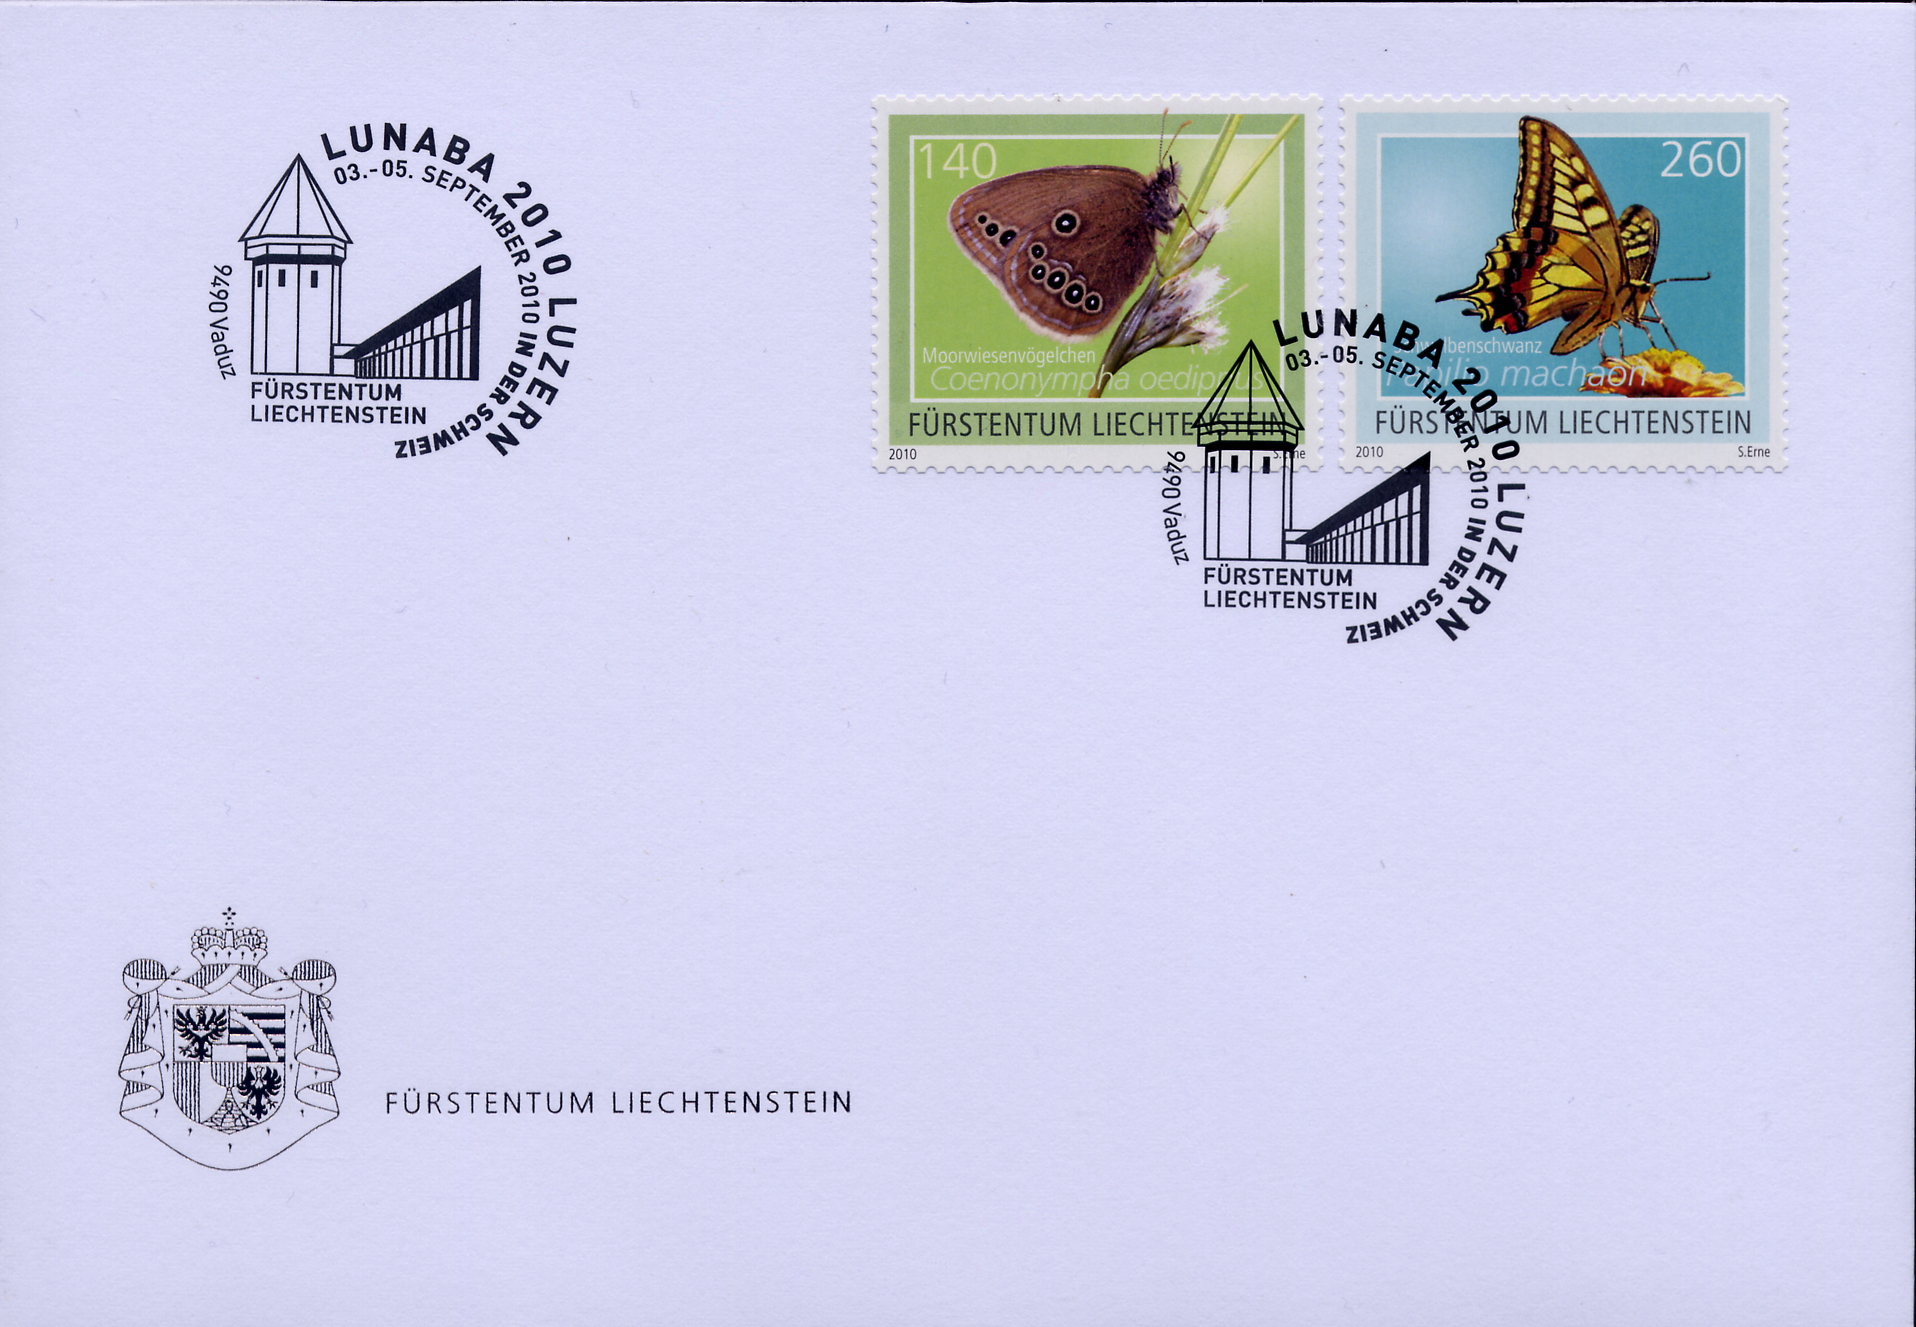 https://swiss-stamps.org/wp-content/uploads/2023/12/2010-9-Luzern.jpg